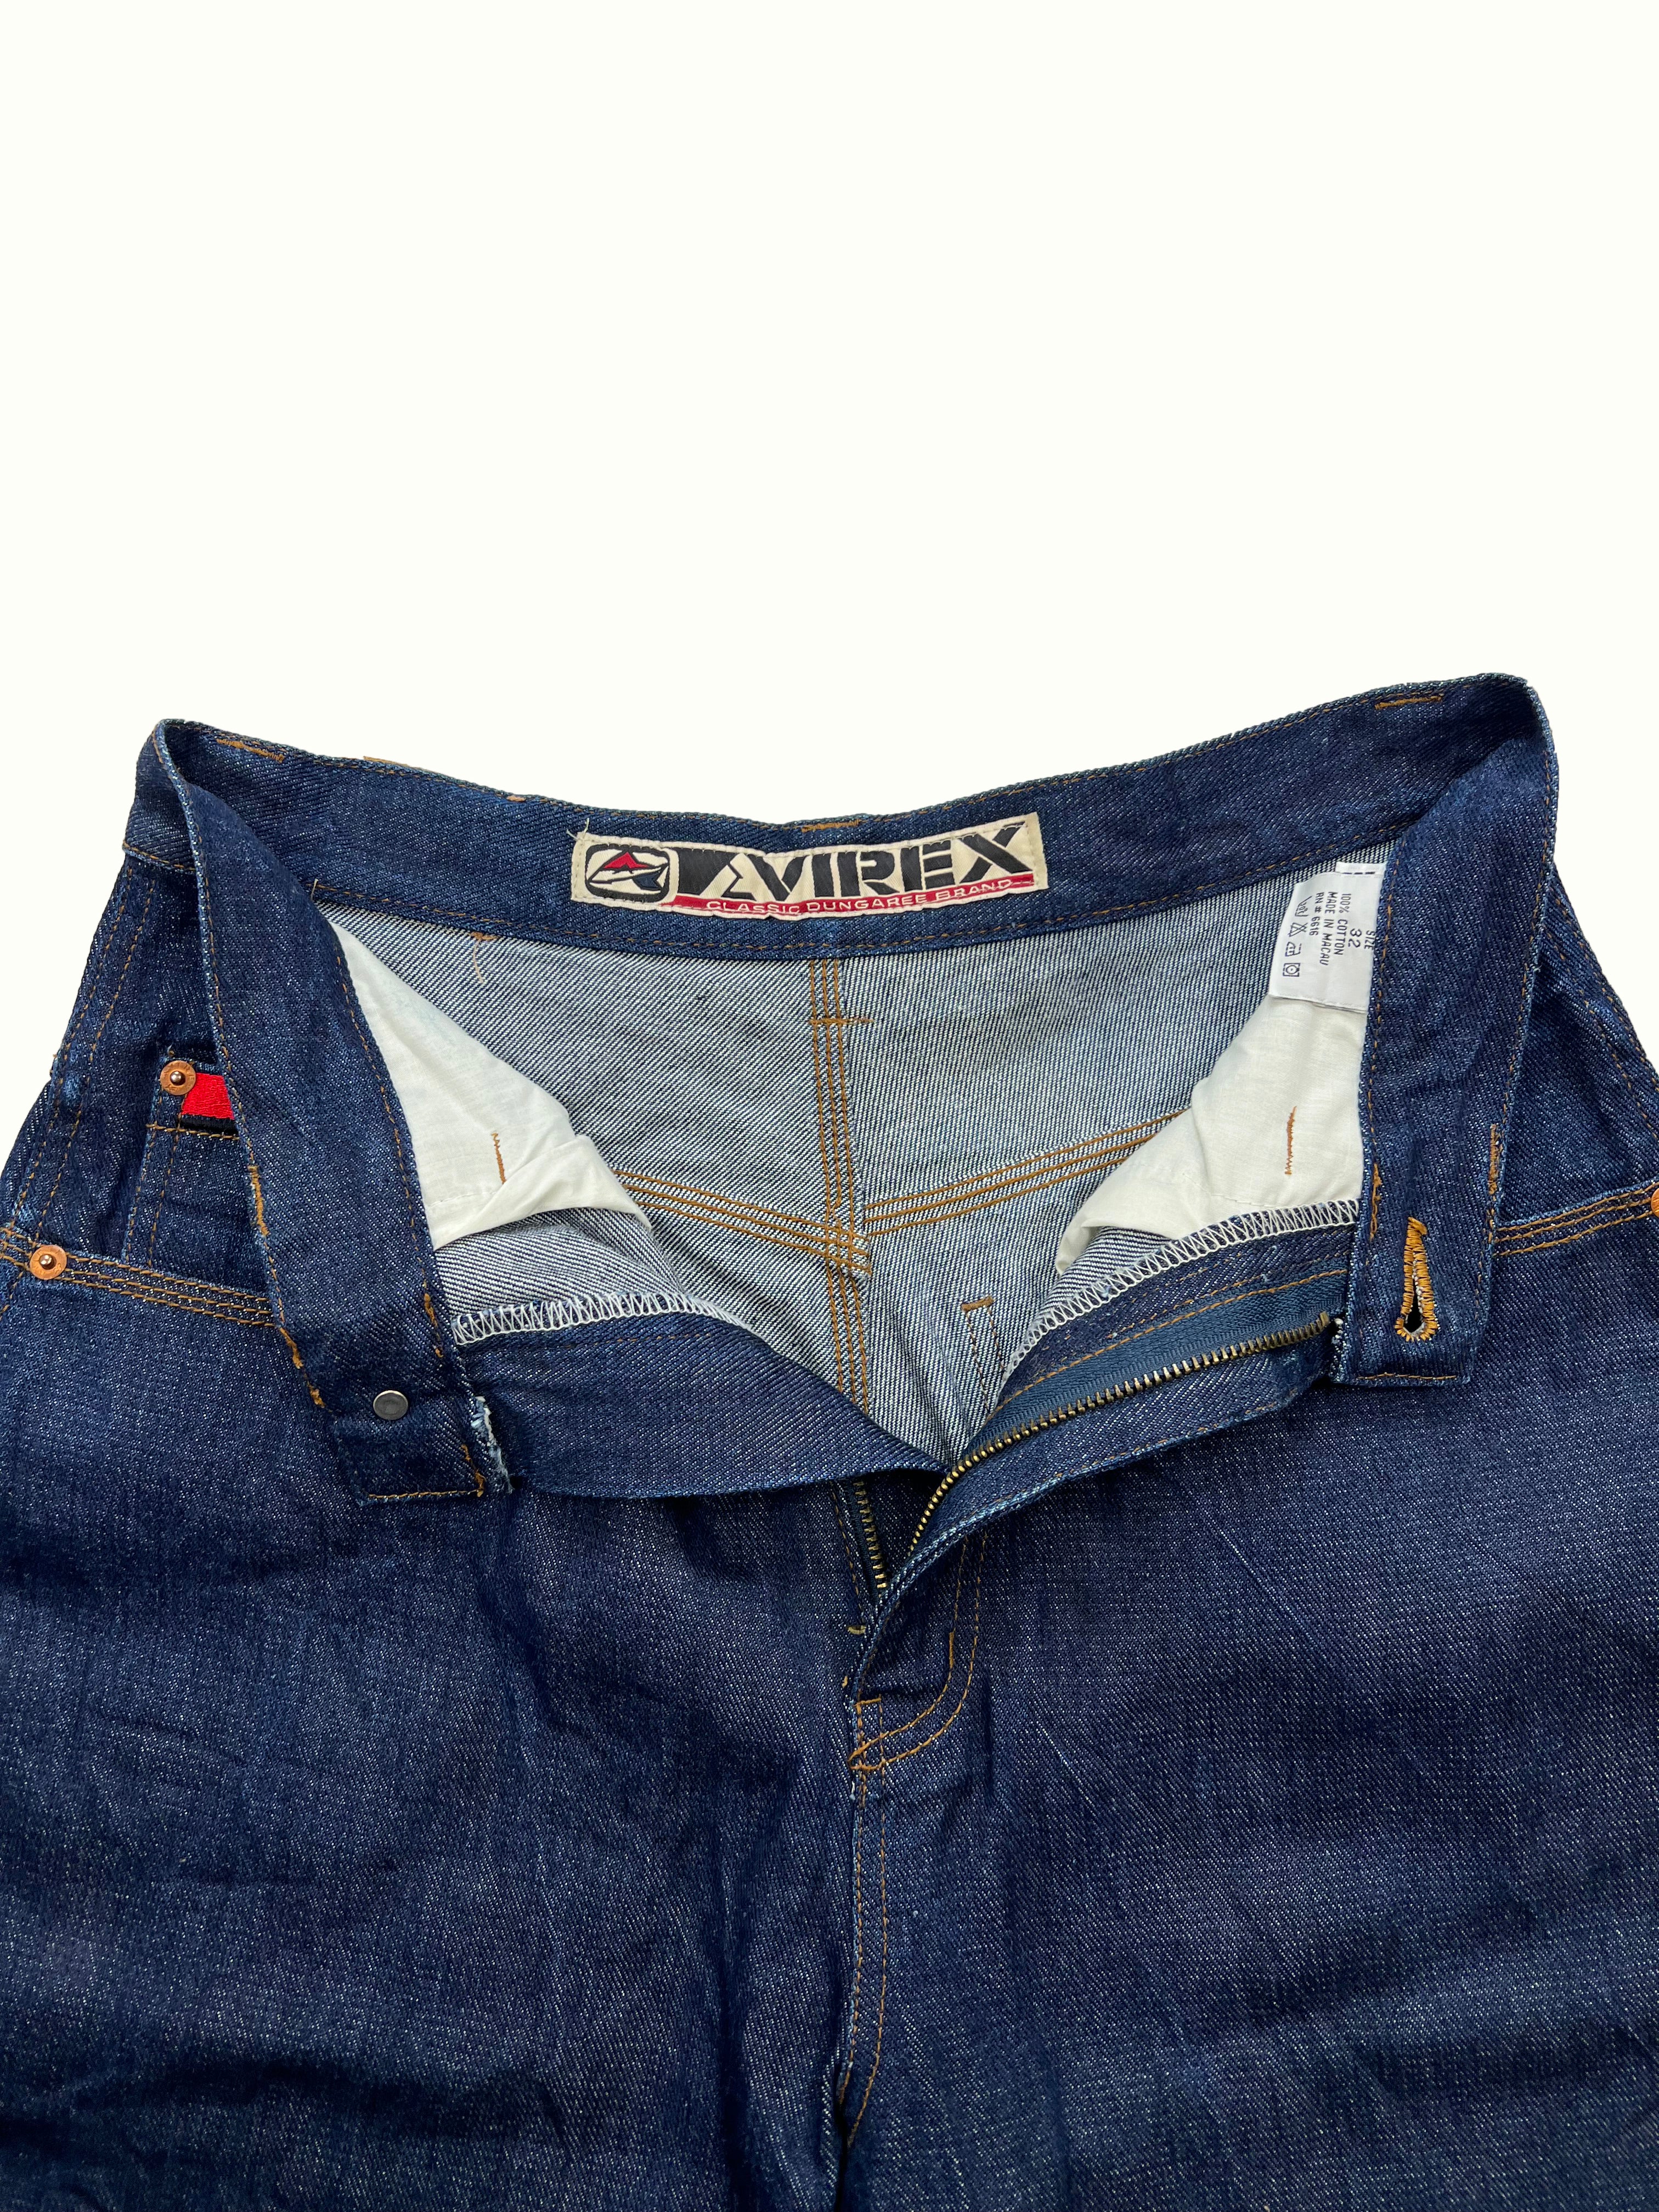 Avirex Denim Shorts 90's